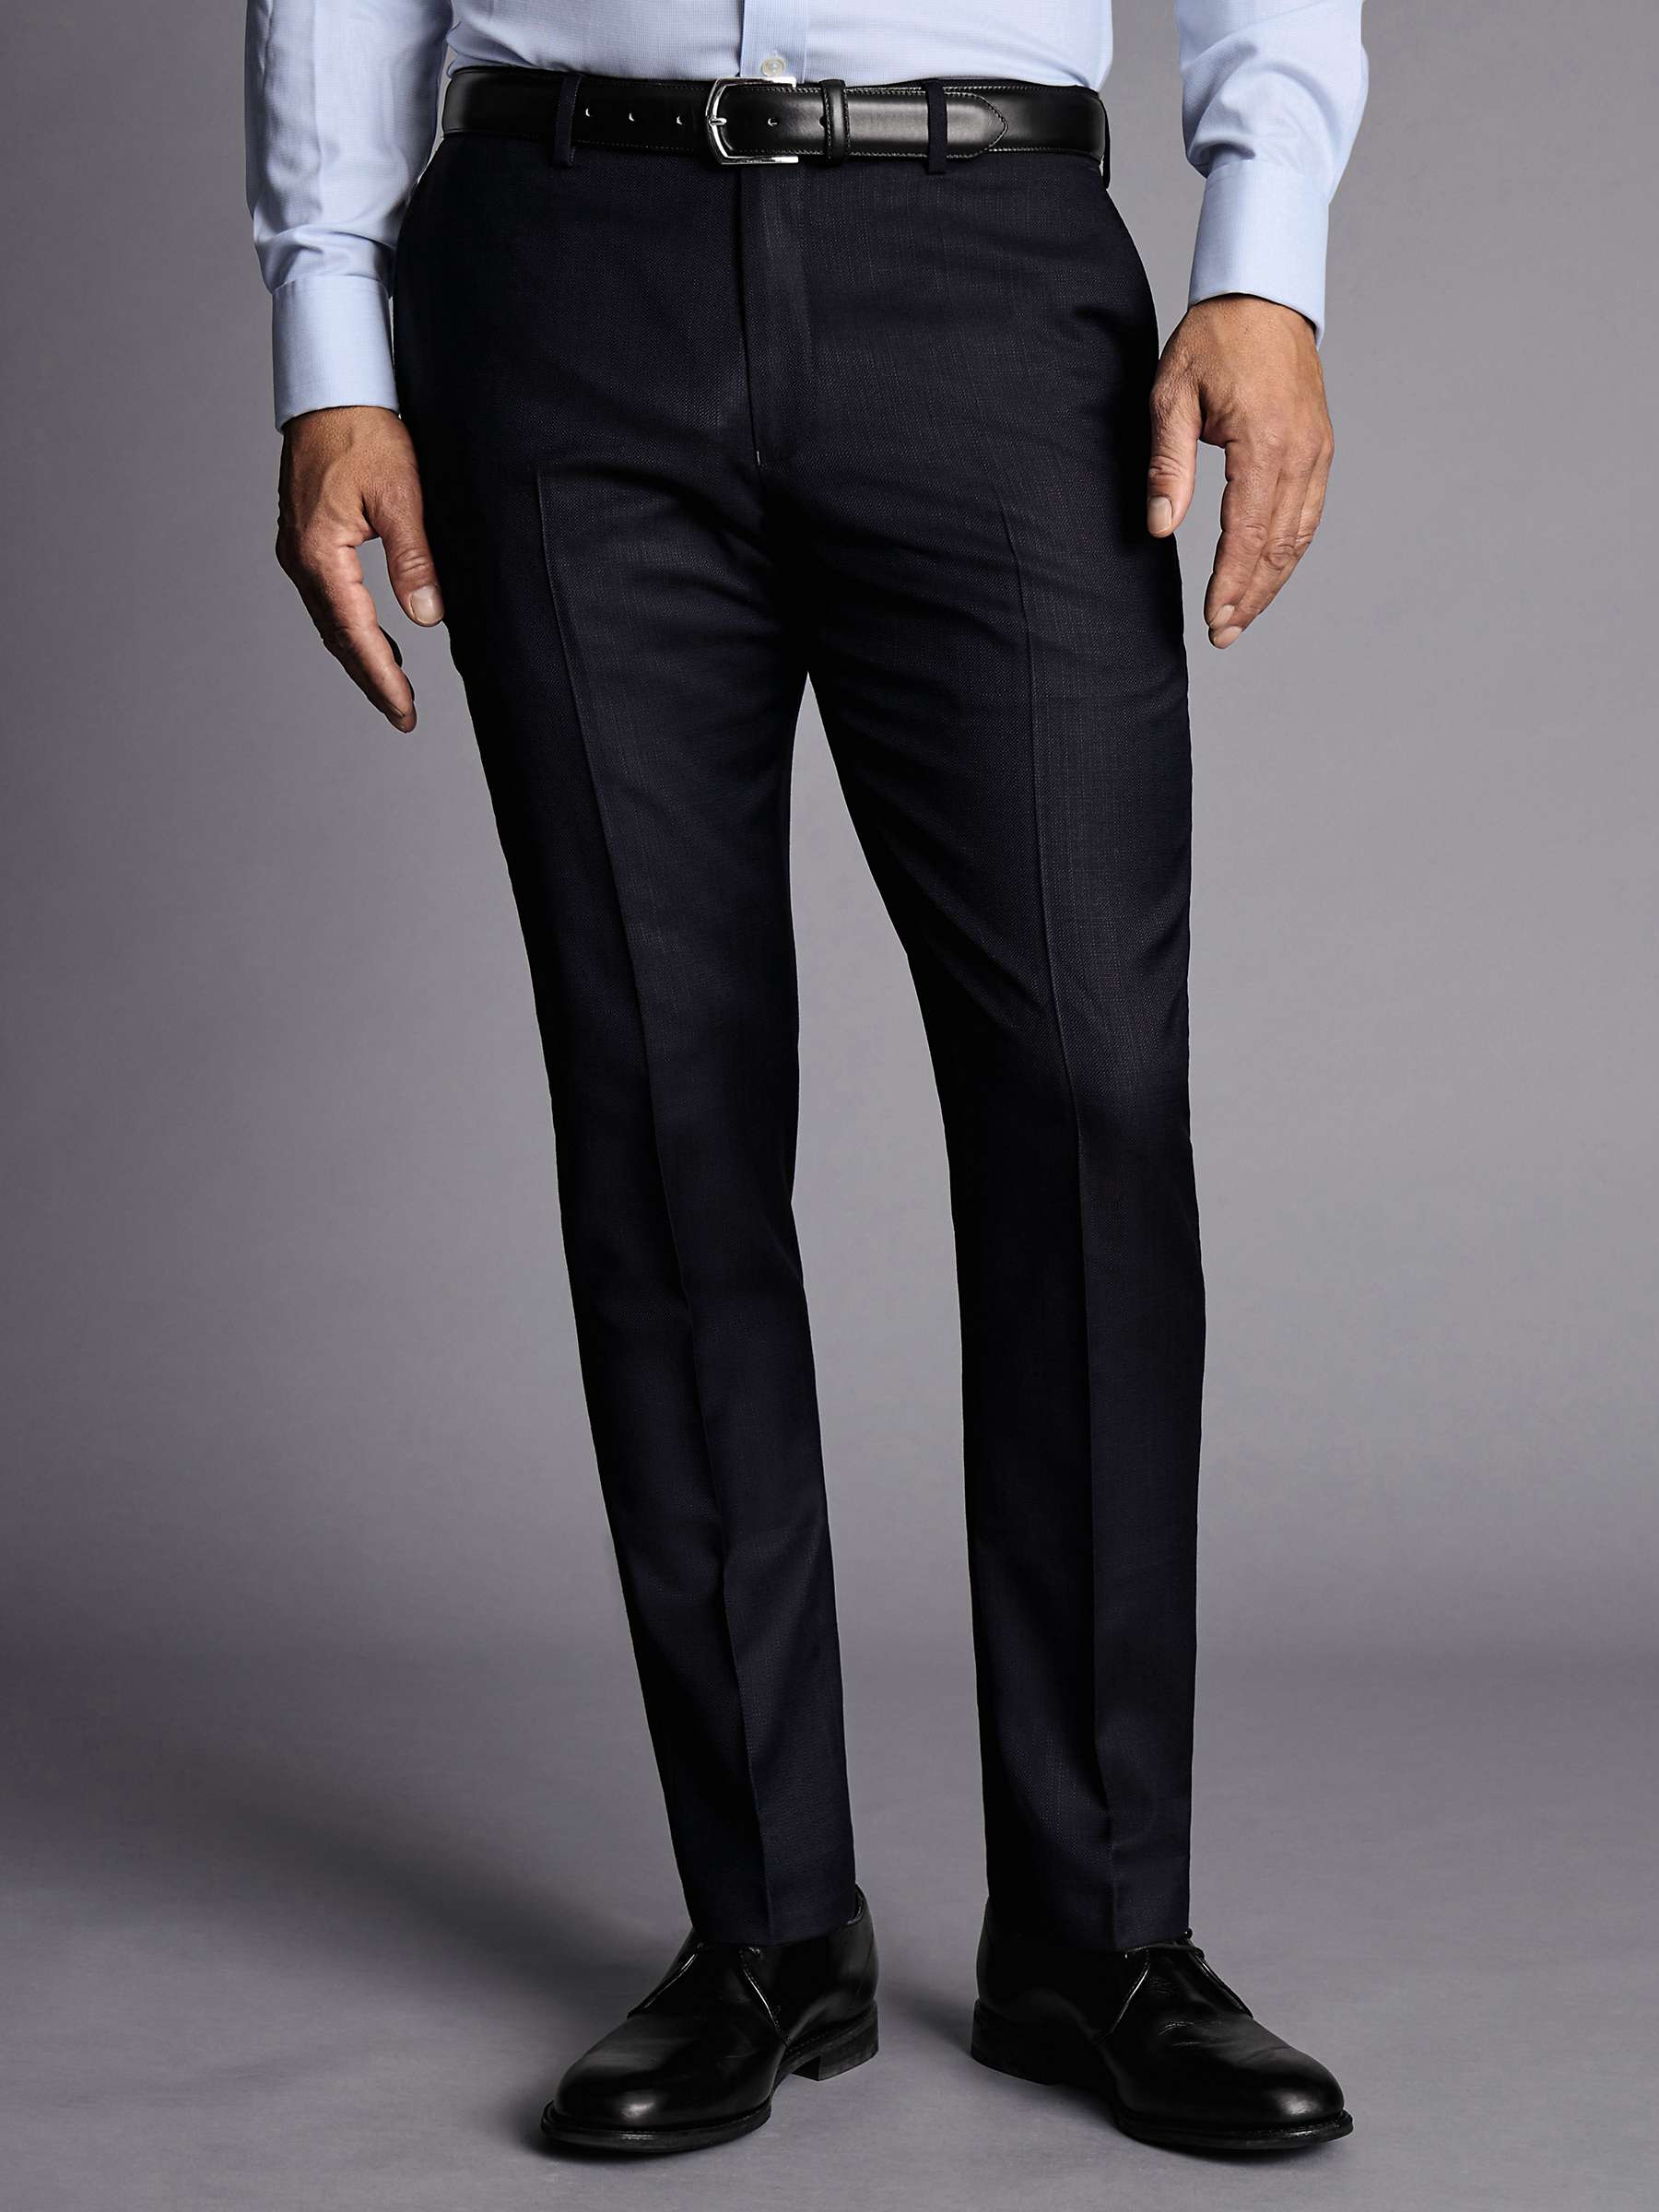 Buy Charles Tyrwhitt Slim Fit Italian Luxury Suit Trousers Online at johnlewis.com